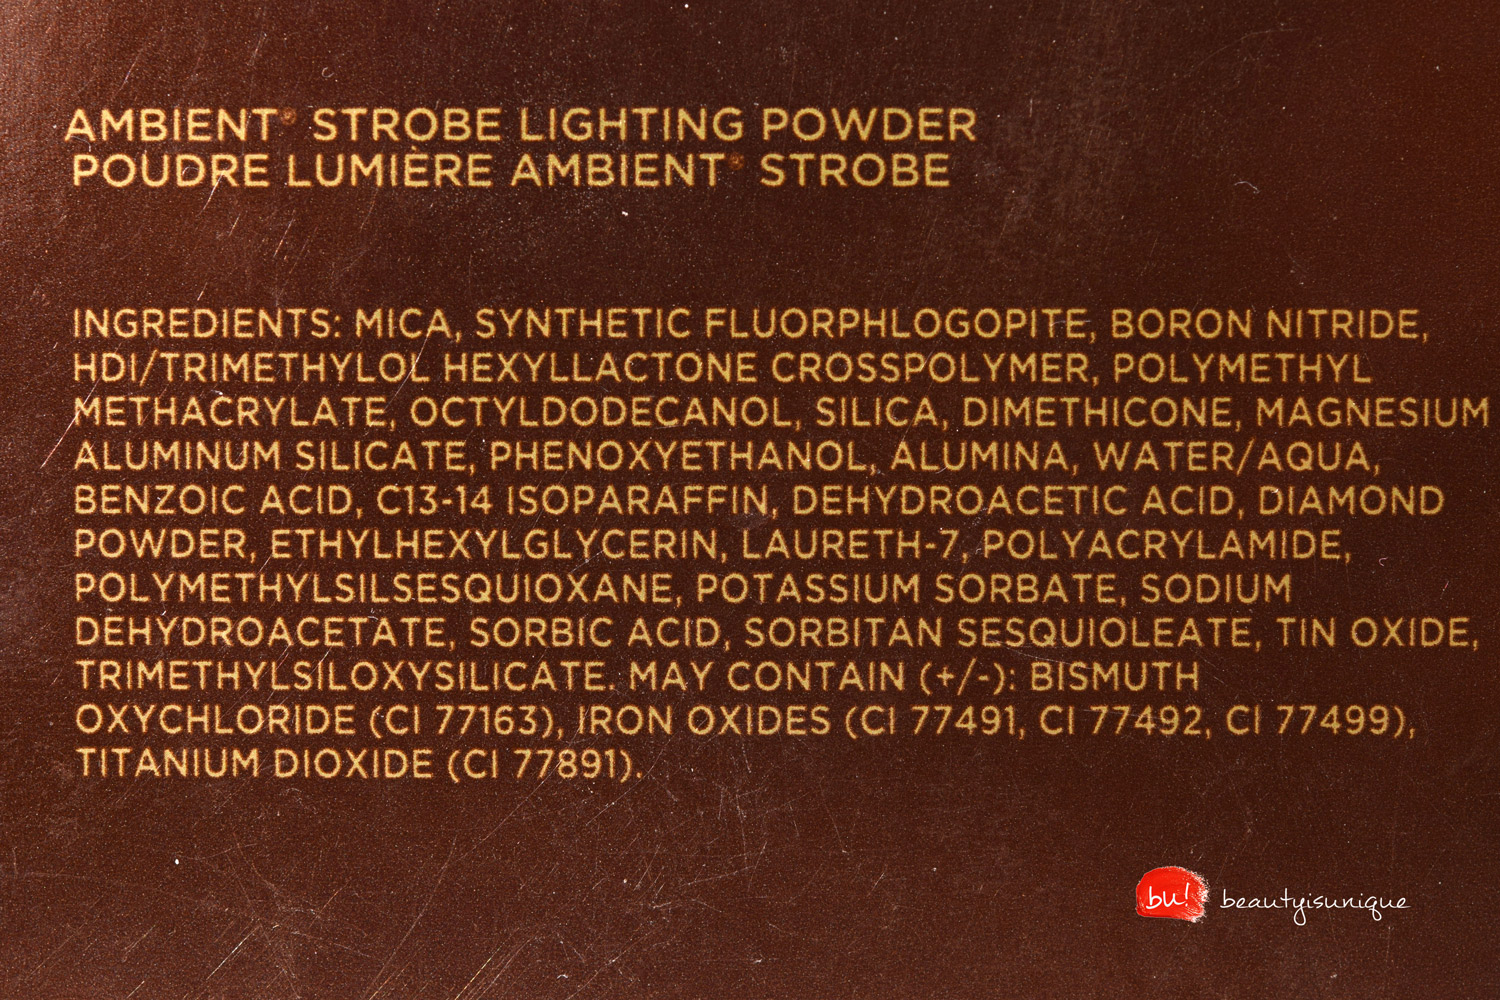 hourglass-ambient-iridescent-strobe-light-ingredients